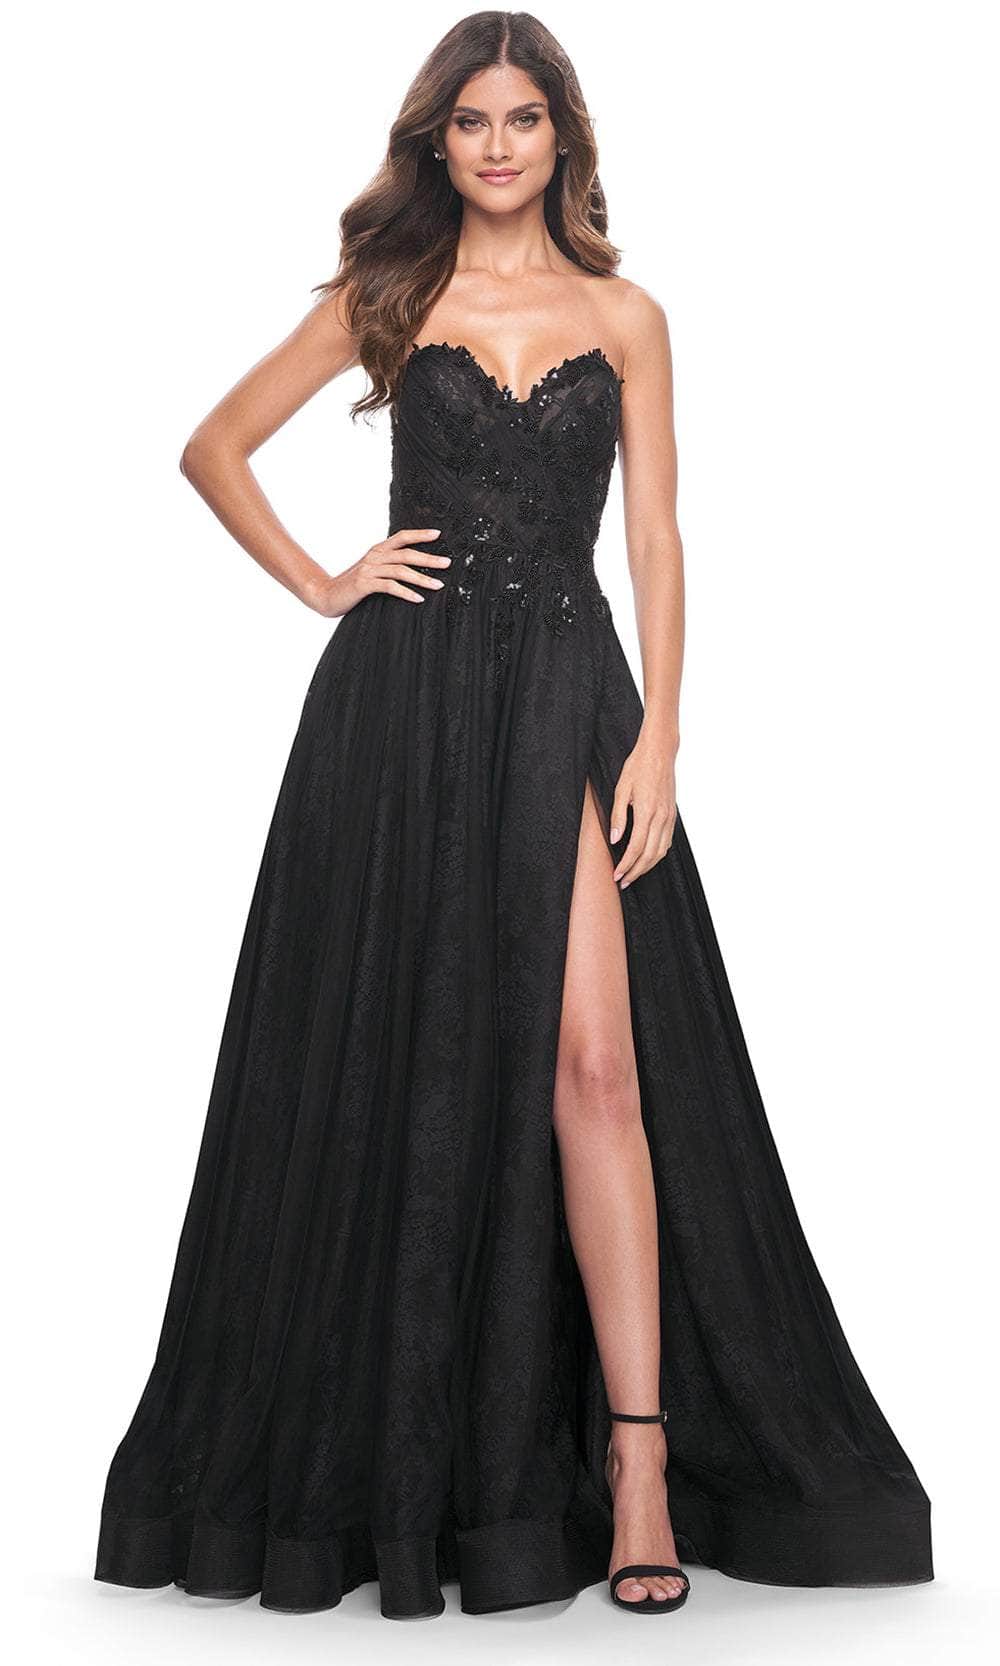 Image of La Femme 31954 - Appliqued Strapless A-Line Prom Dress